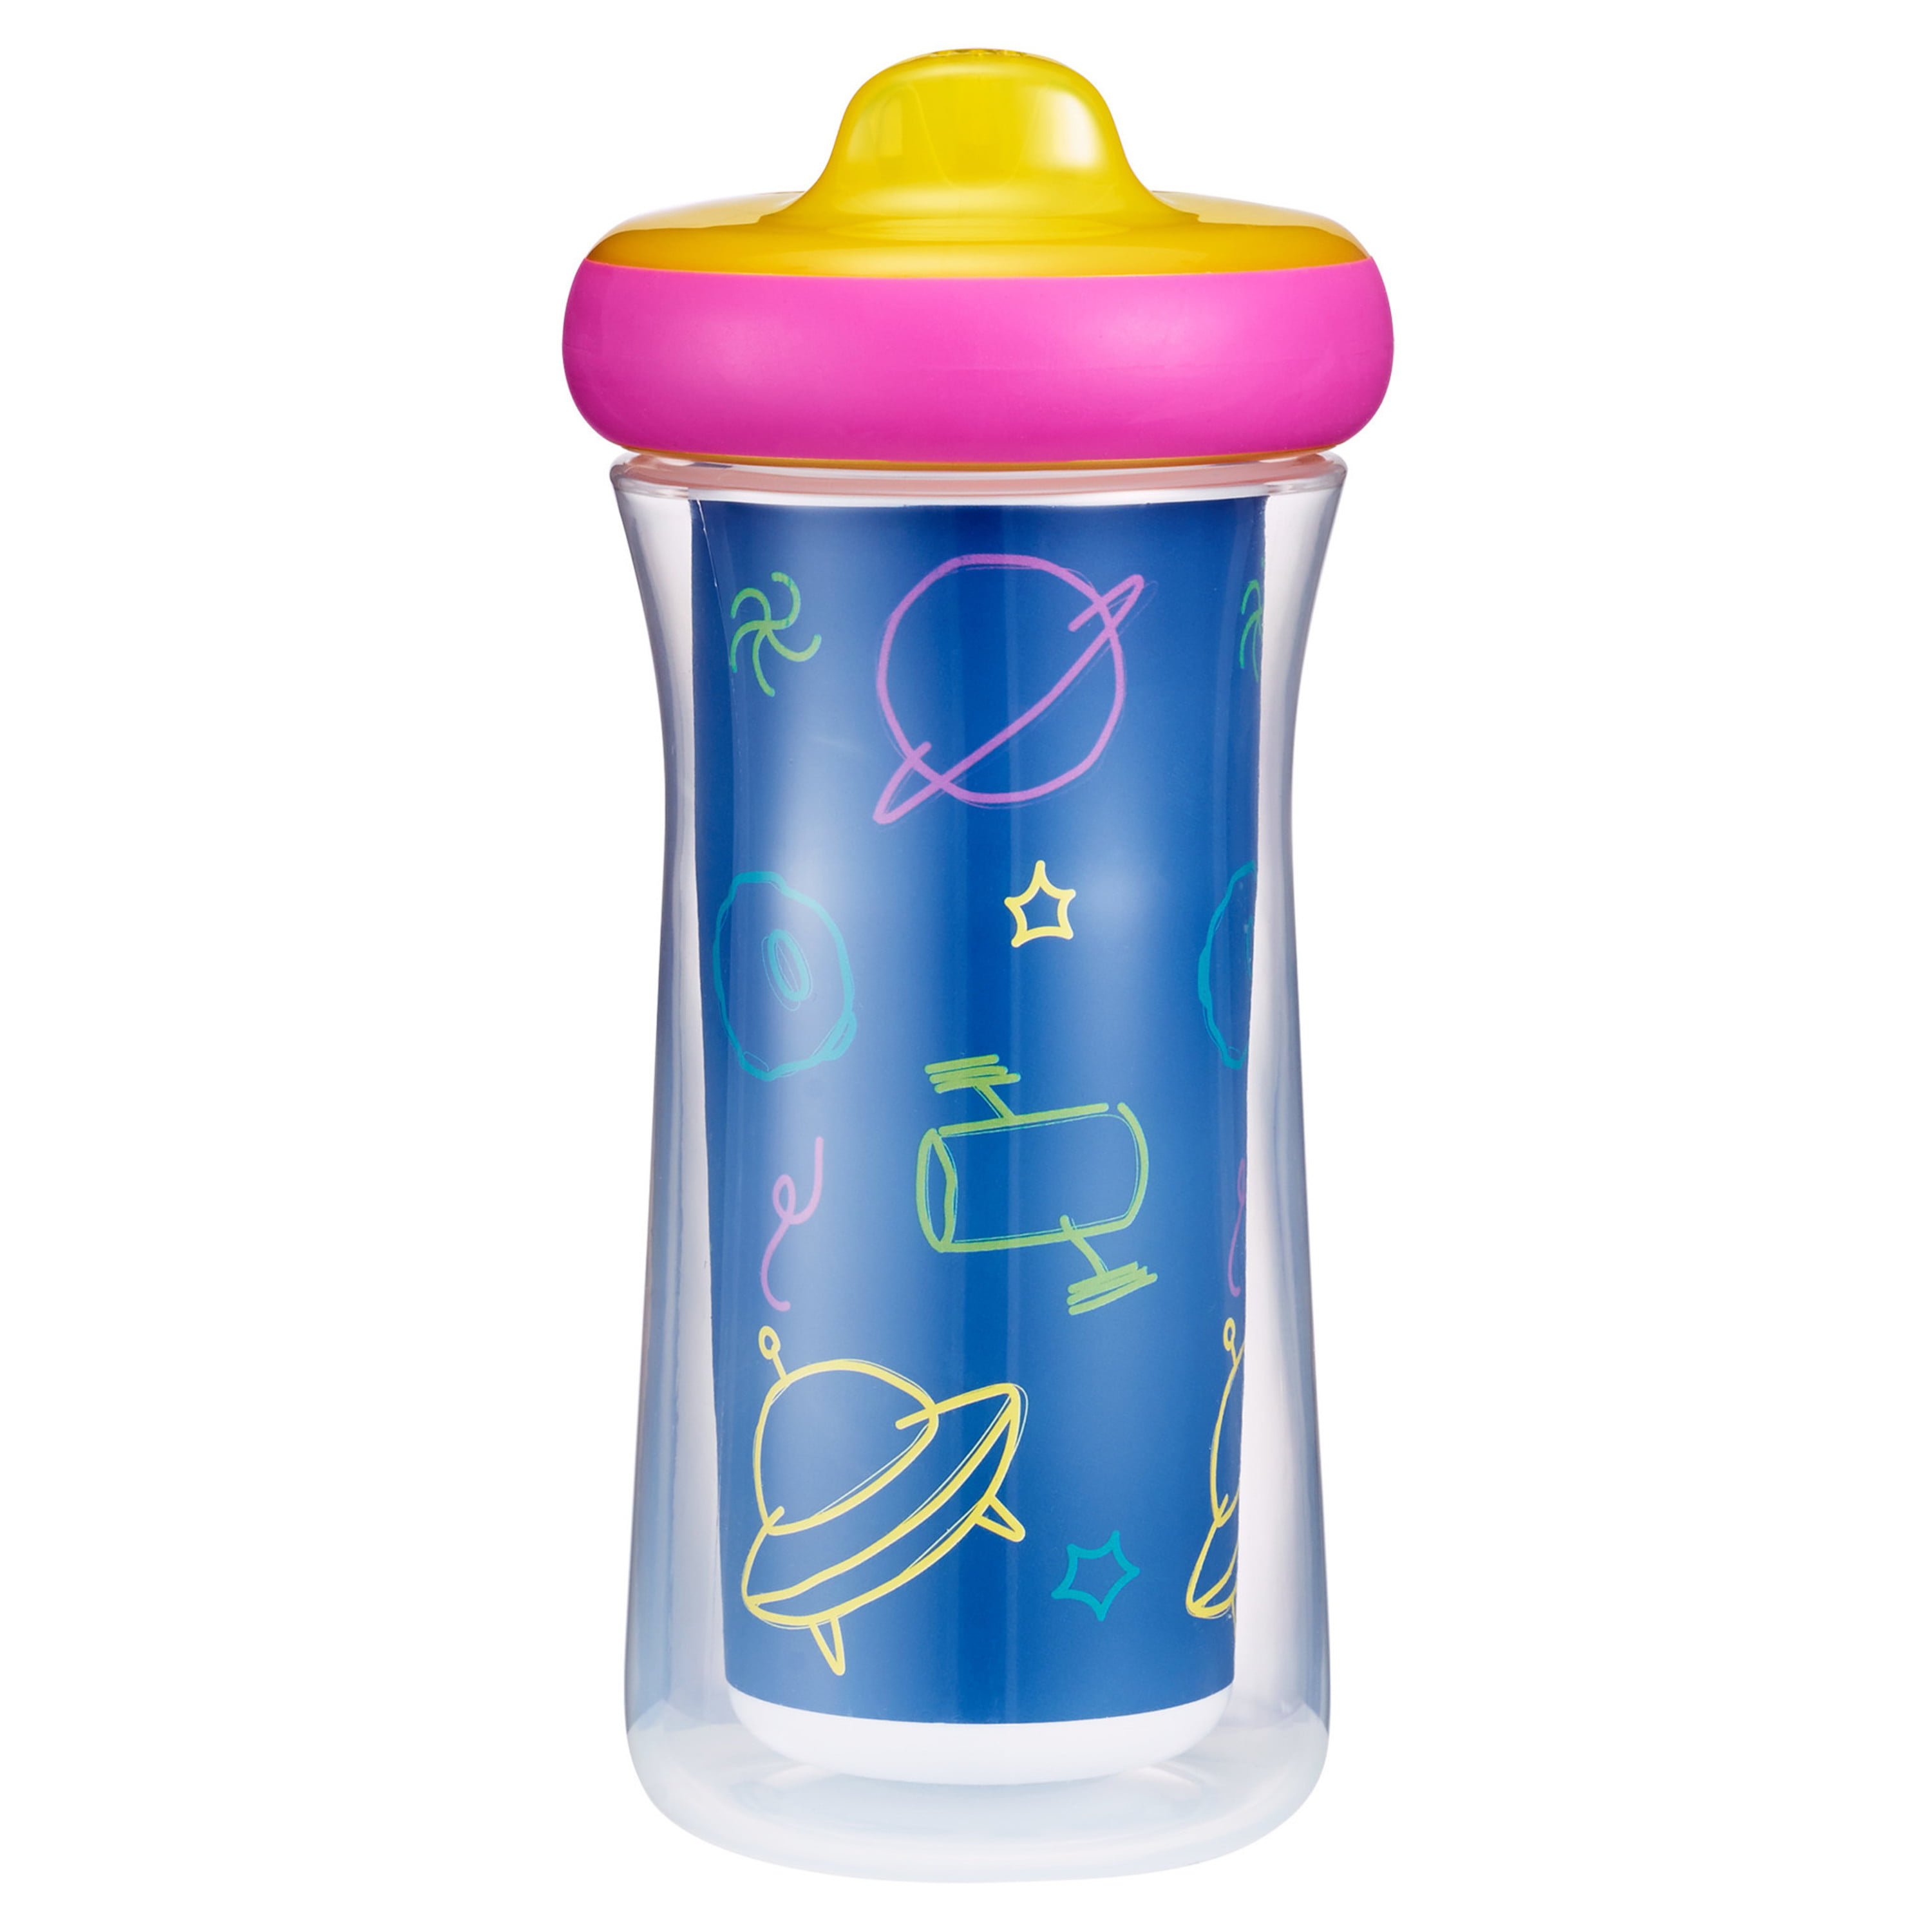 Disney/Pixar Toy Story Confetti Insul Sippy Cup 